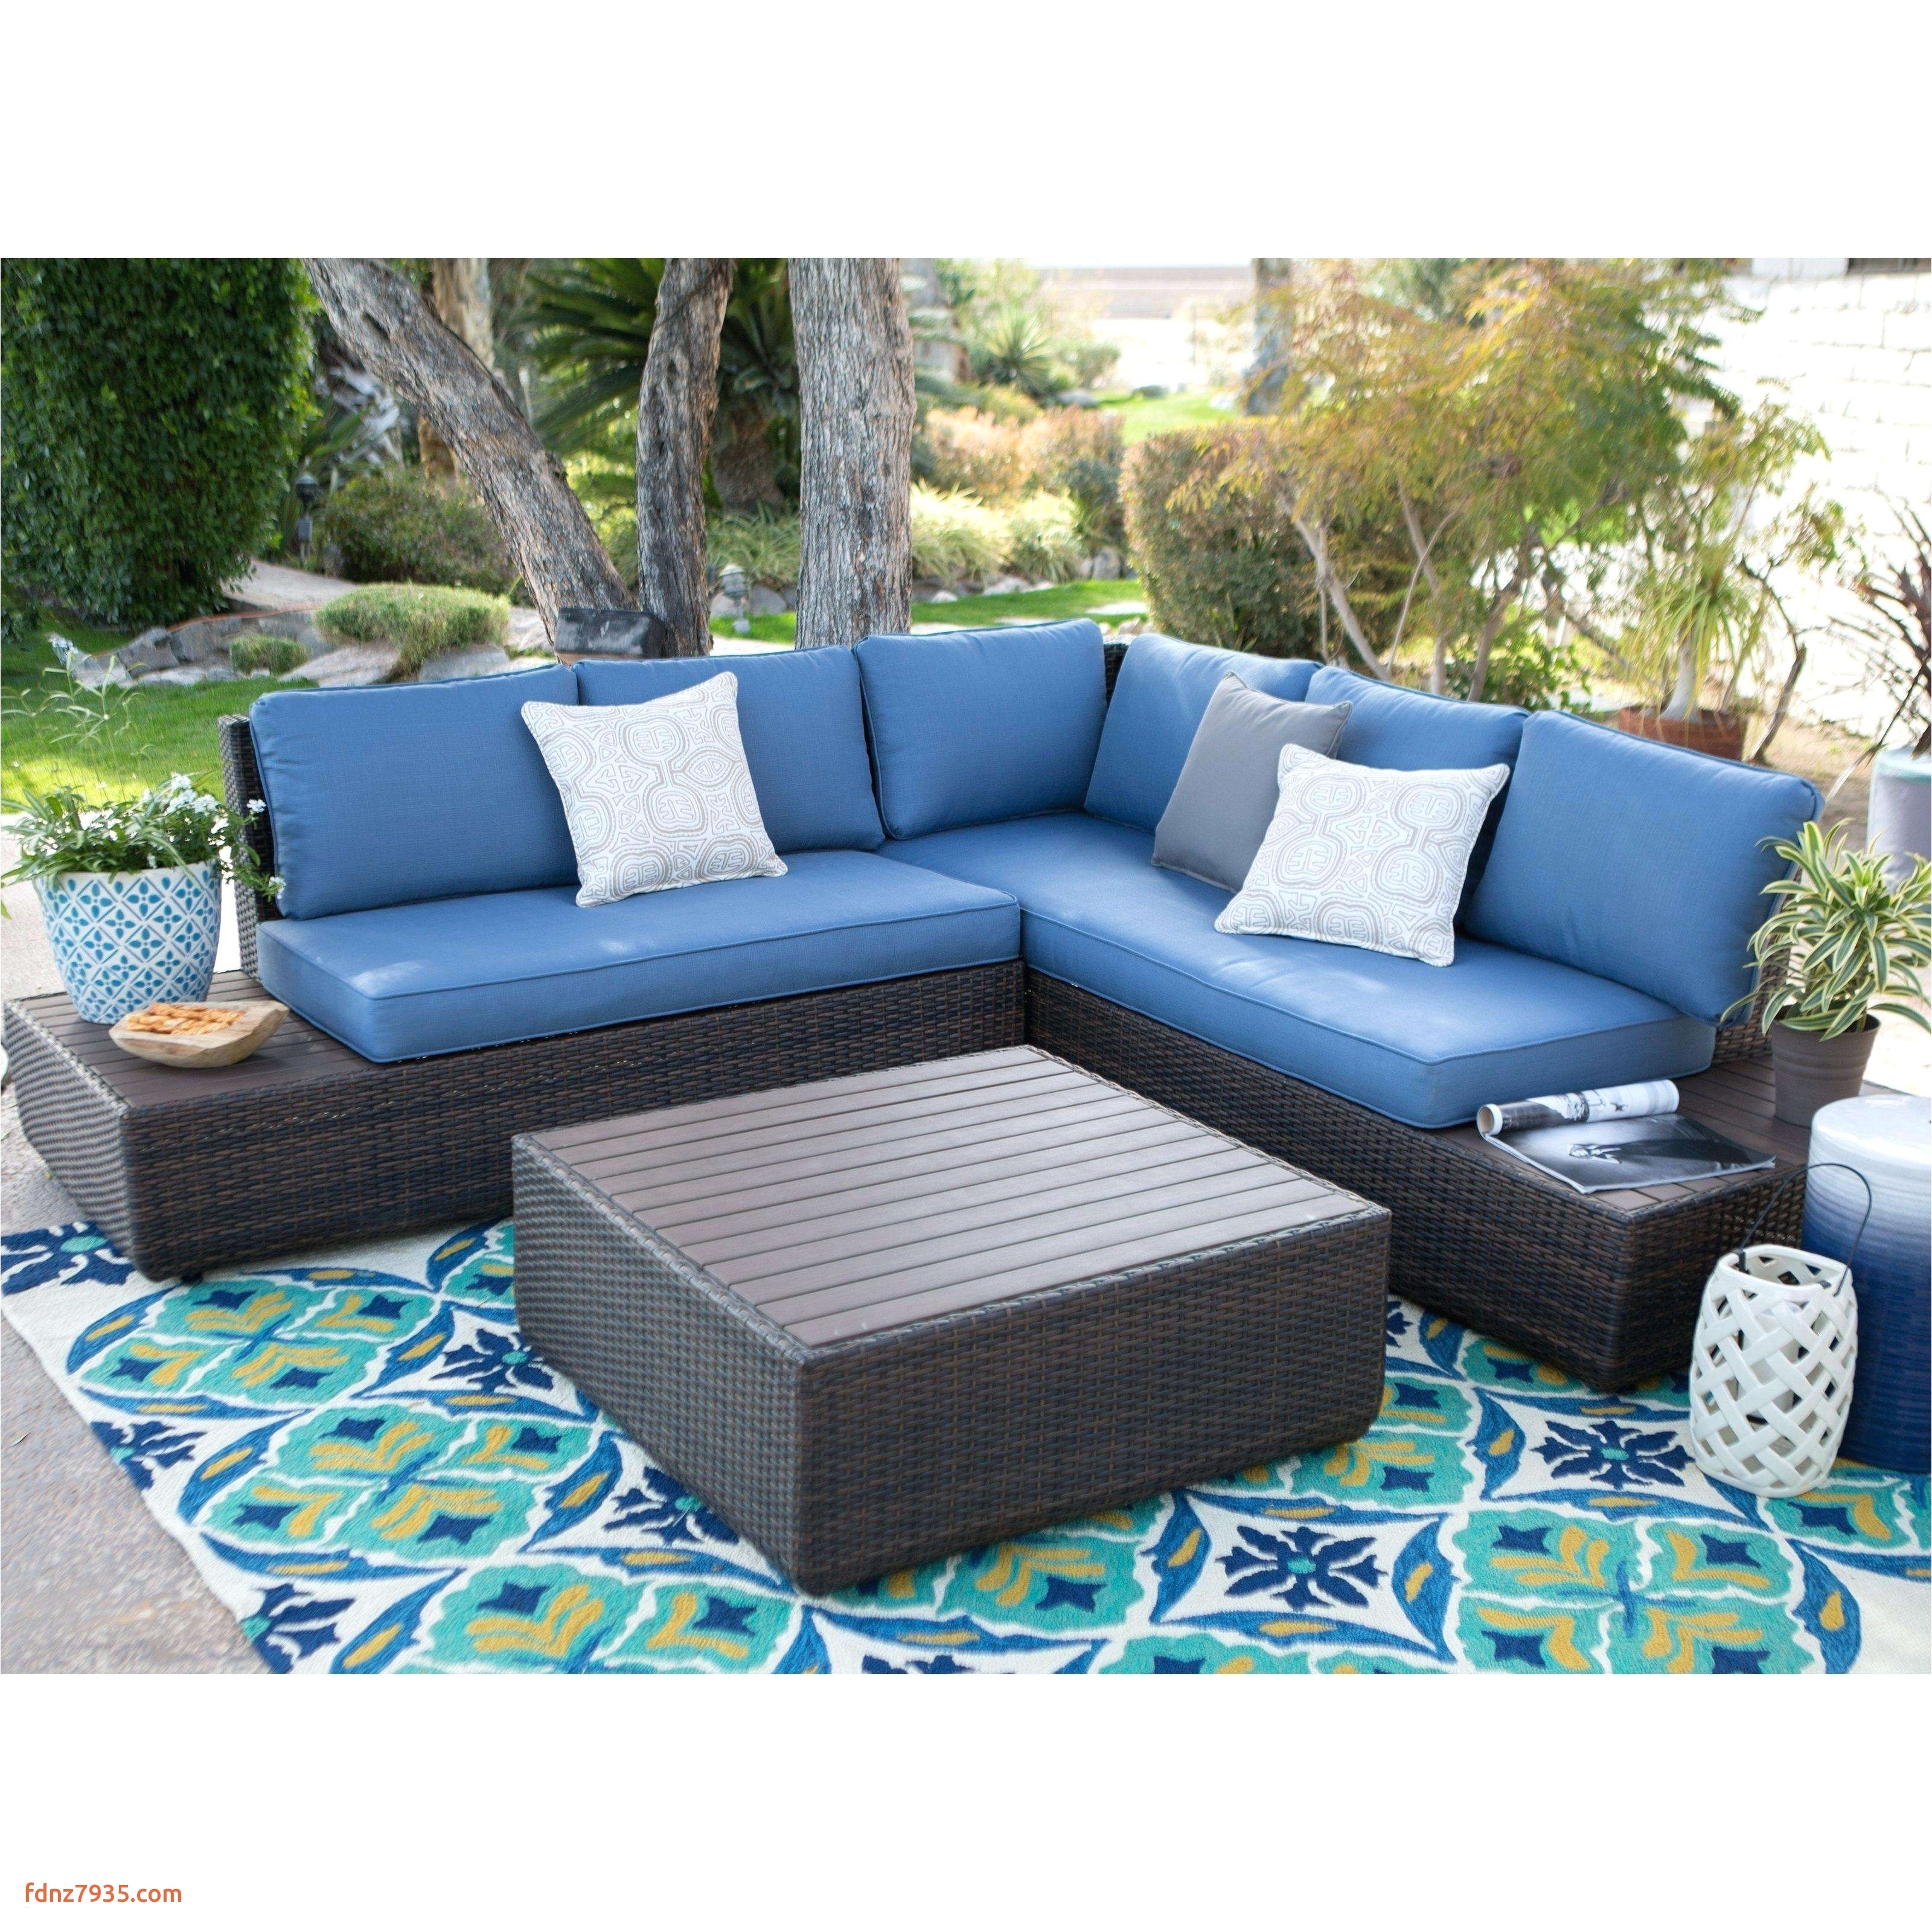 florida patio furniture elegant wrought iron patio new patio sets best wicker outdoor sofa 0d